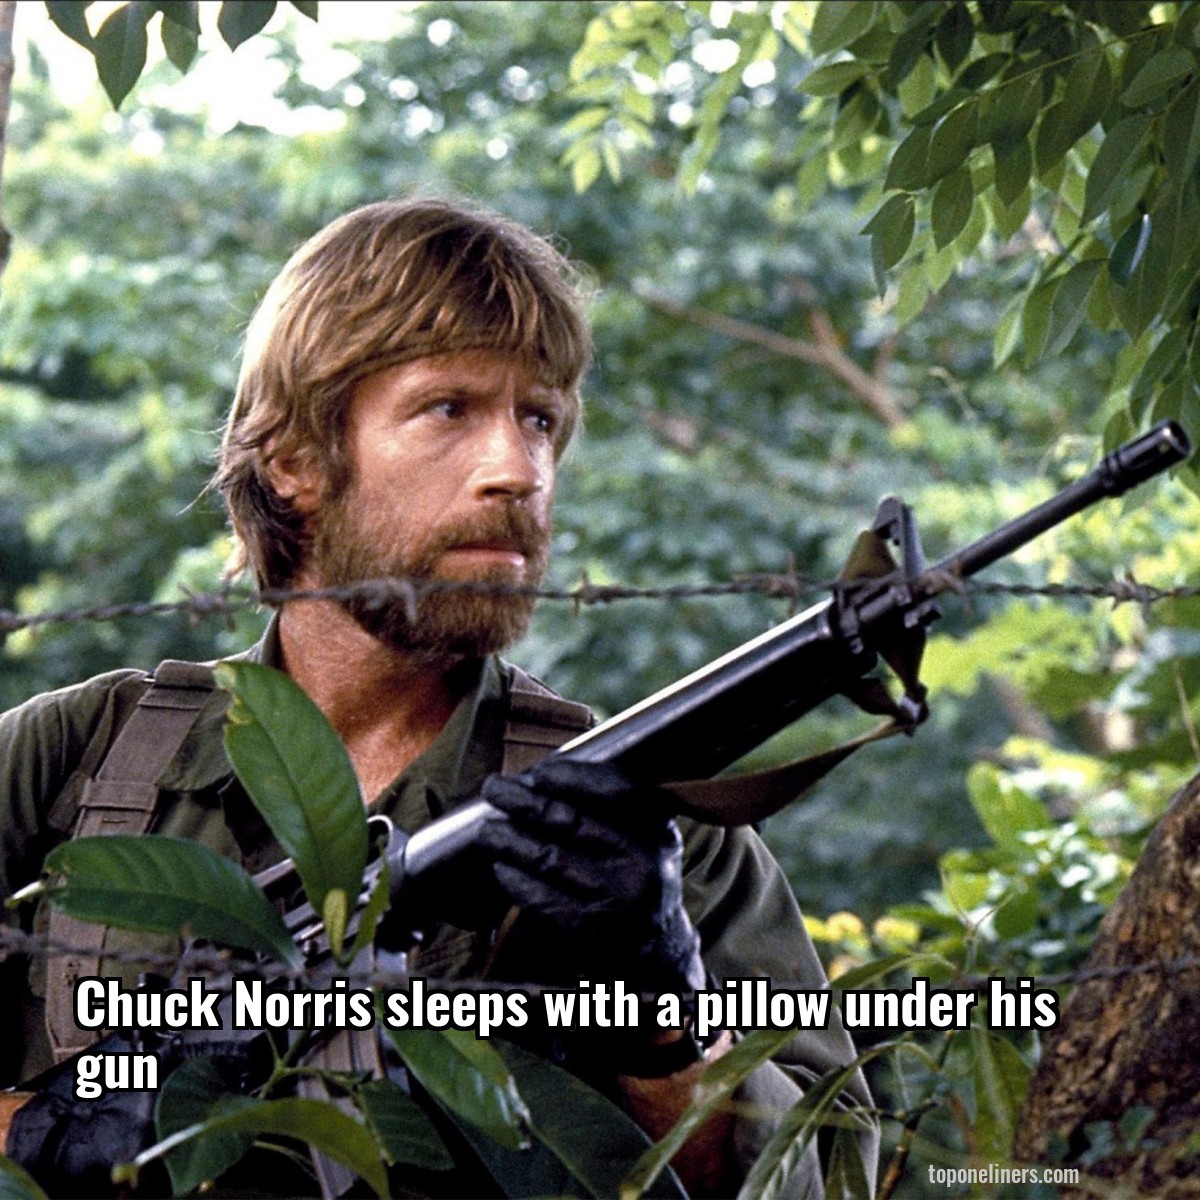 Chuck Norris sleeps with a pillow under his gun